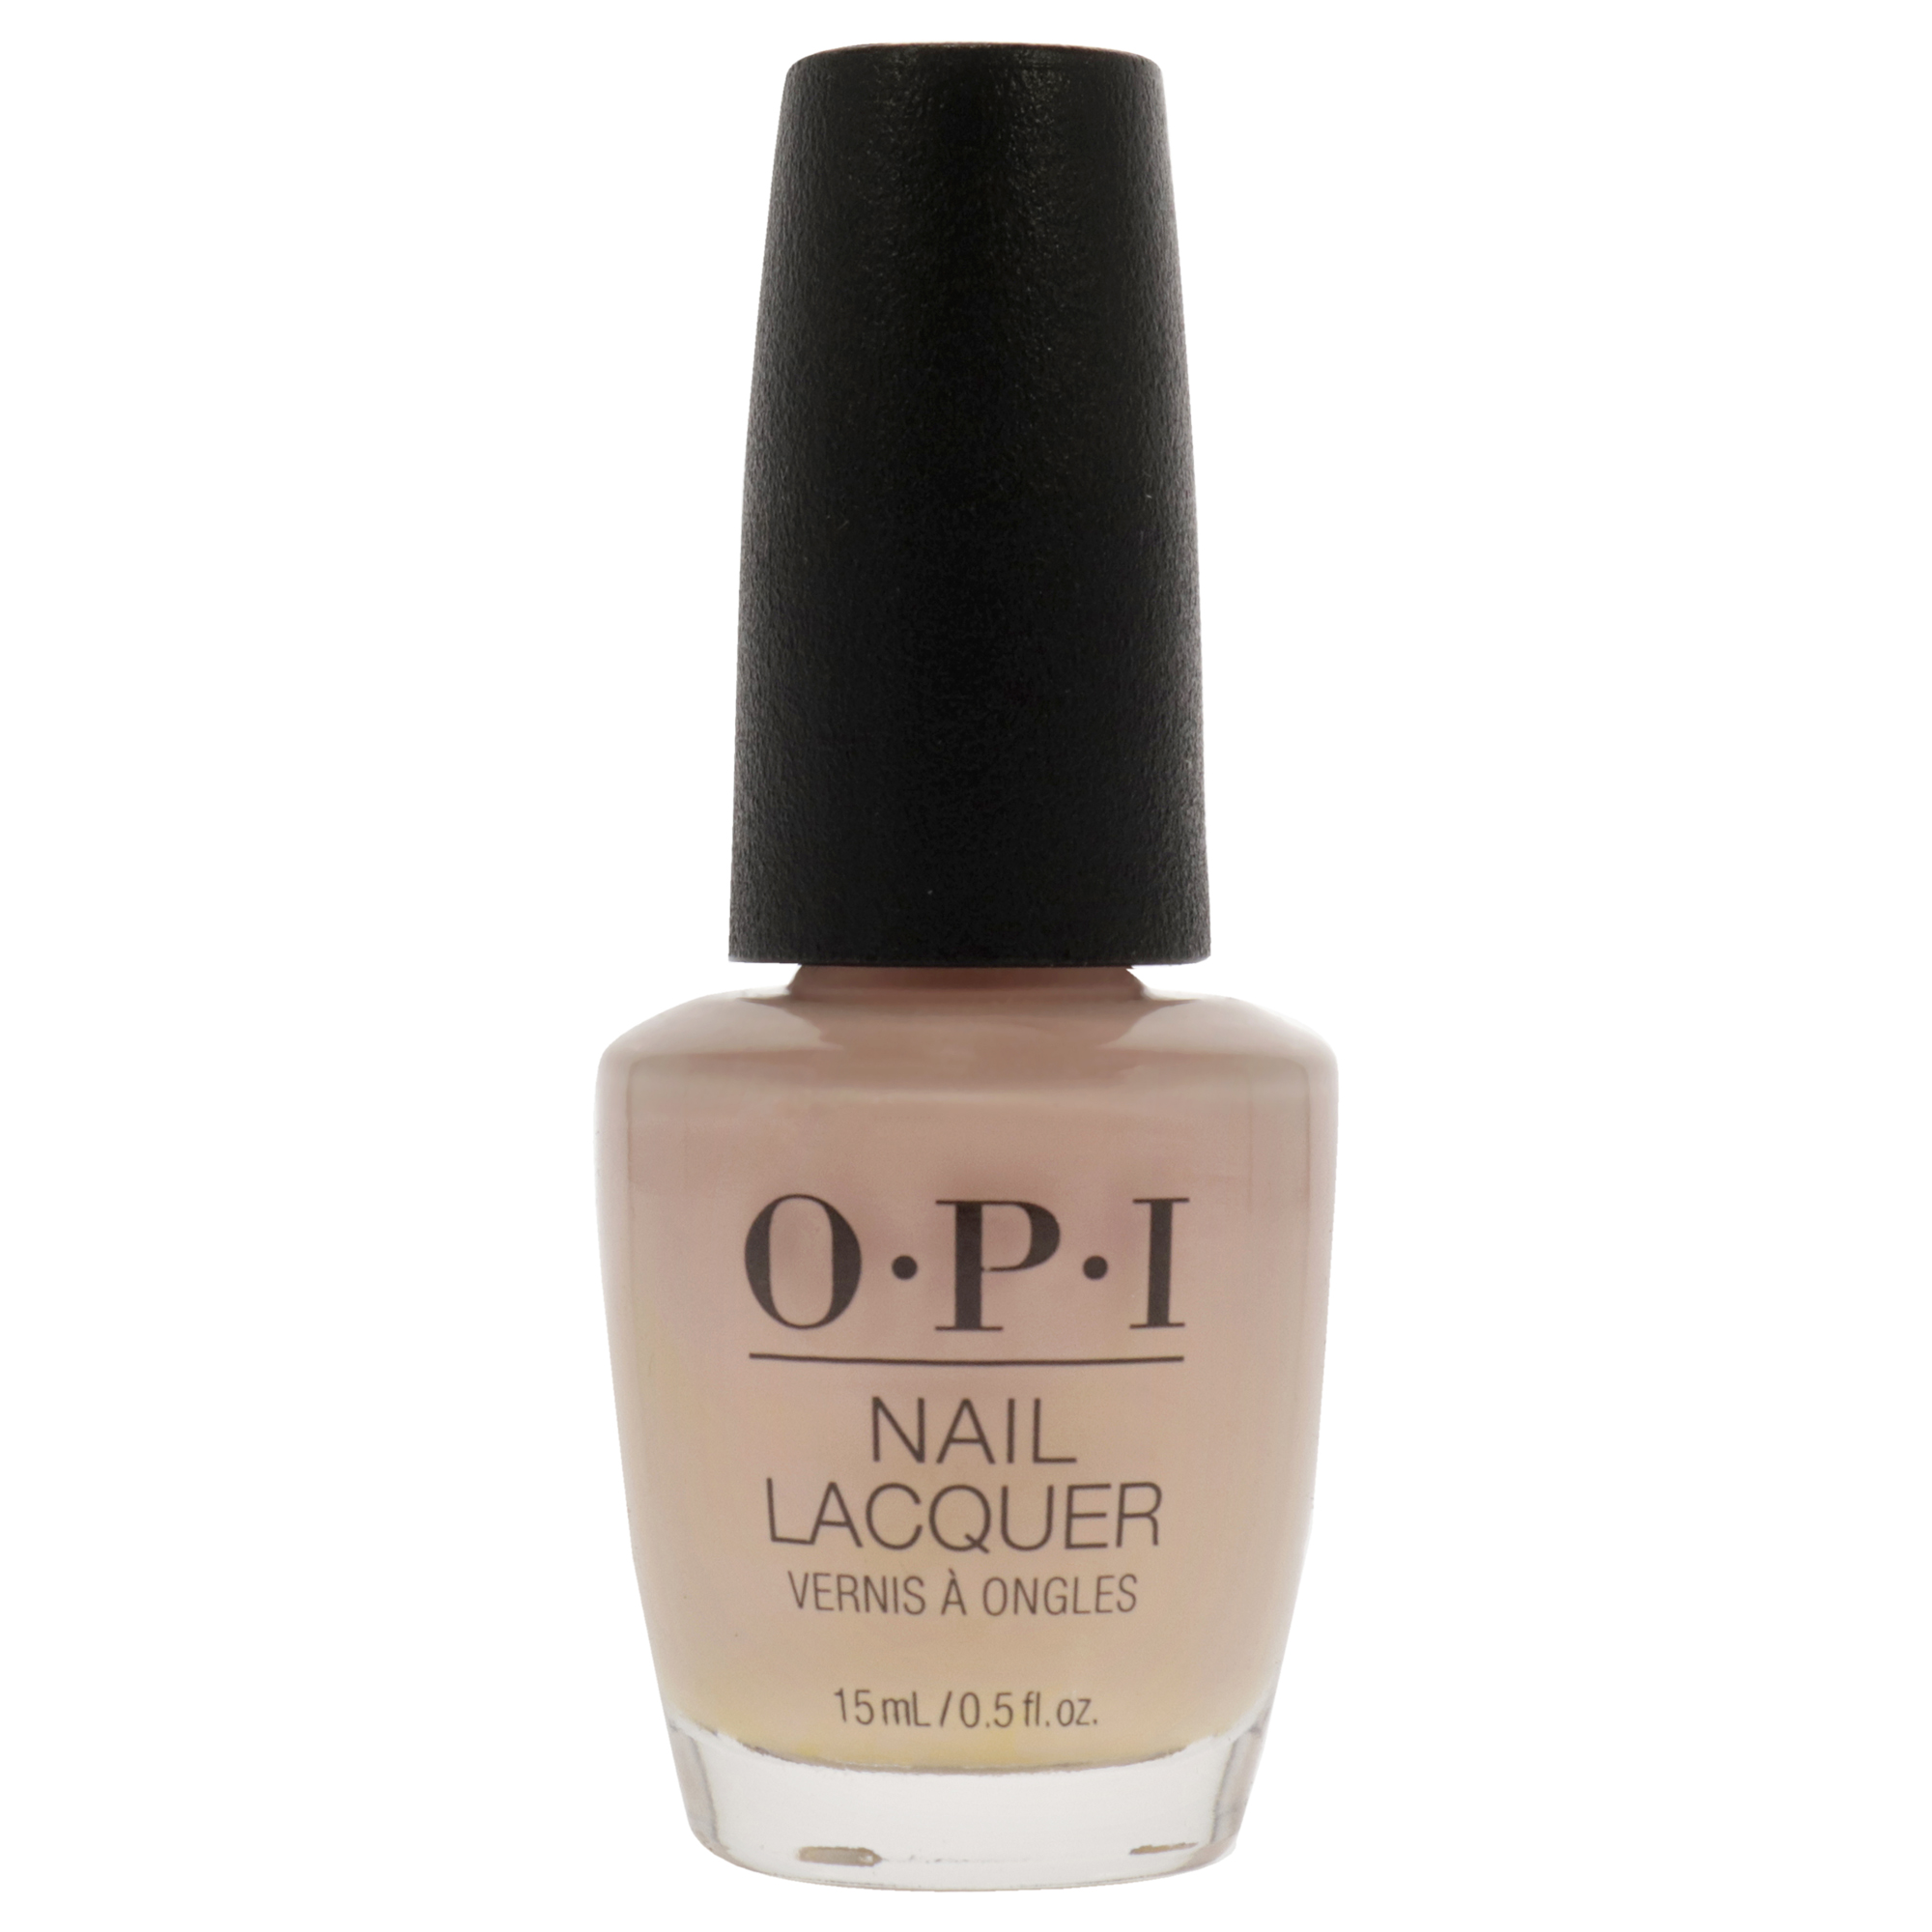 Opi Nail Lacquer # NL S86 Bubble Bath by OPI for Women - 0.5 oz Nail Polish